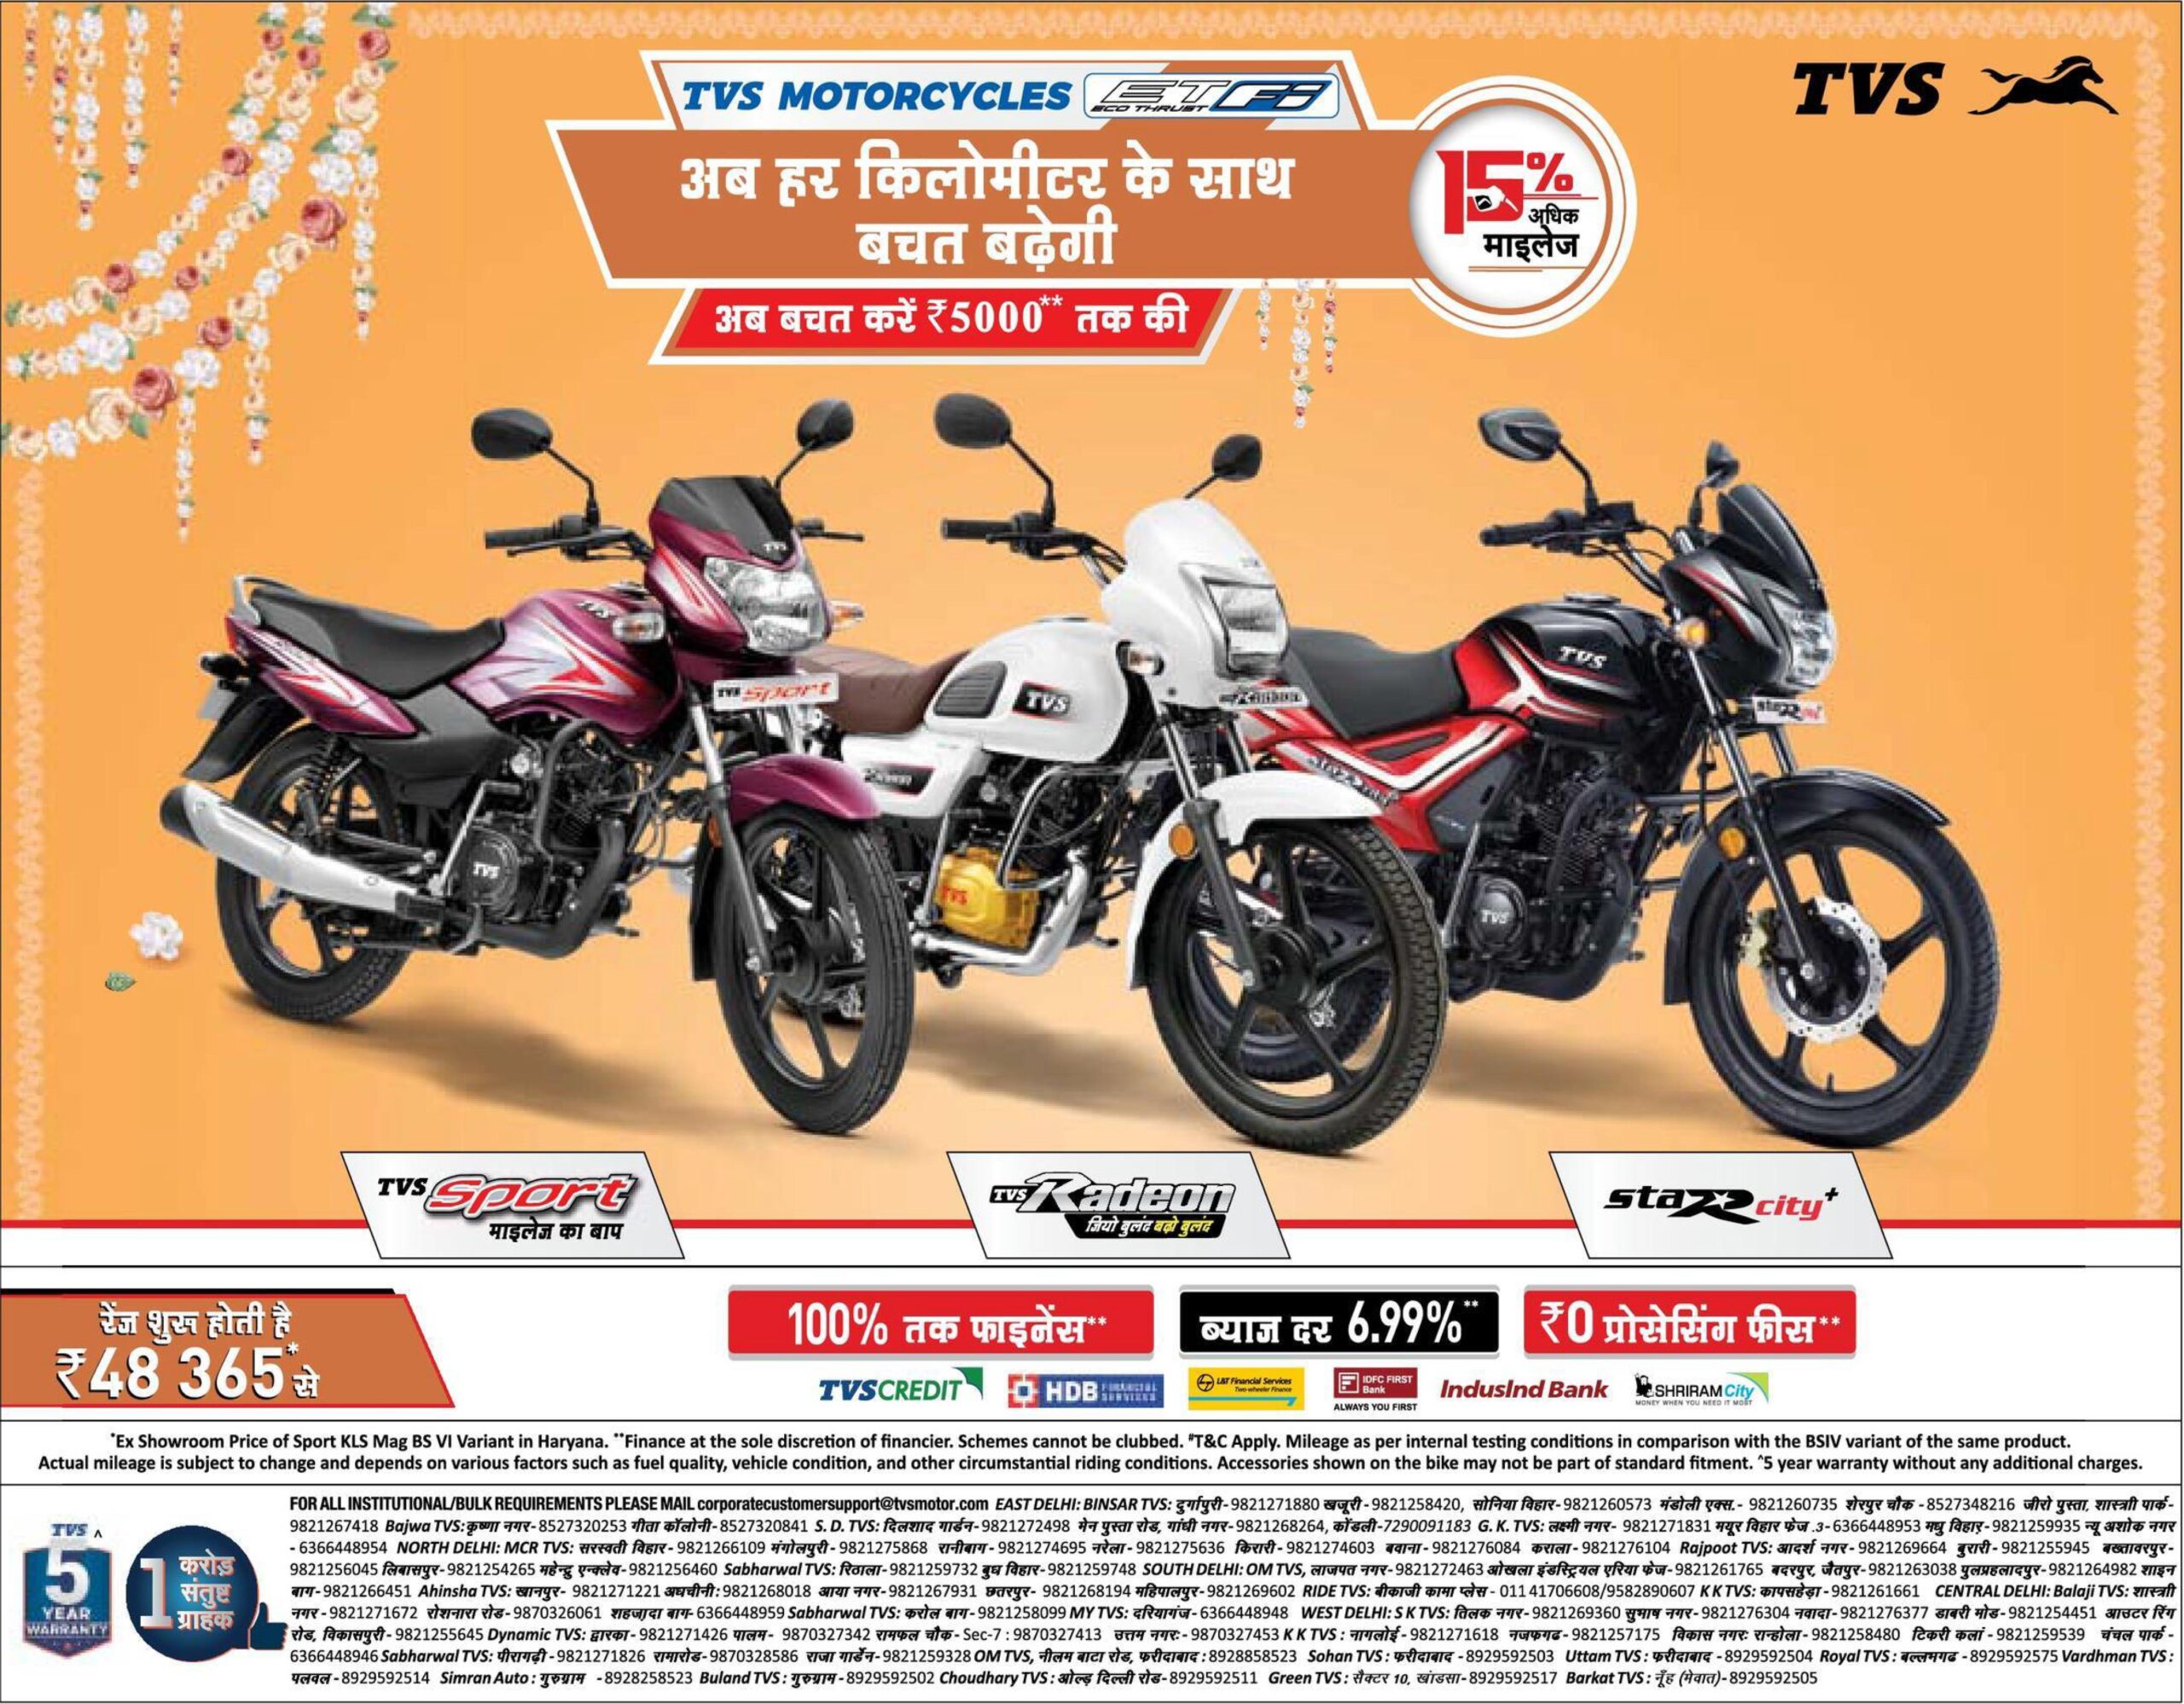 tvs-motorcycles-et-fi-tvs-sport-tvs-radeon-star-city-15%-more-milage-ad-dainik-bhaskar-delhi-8-7-2021